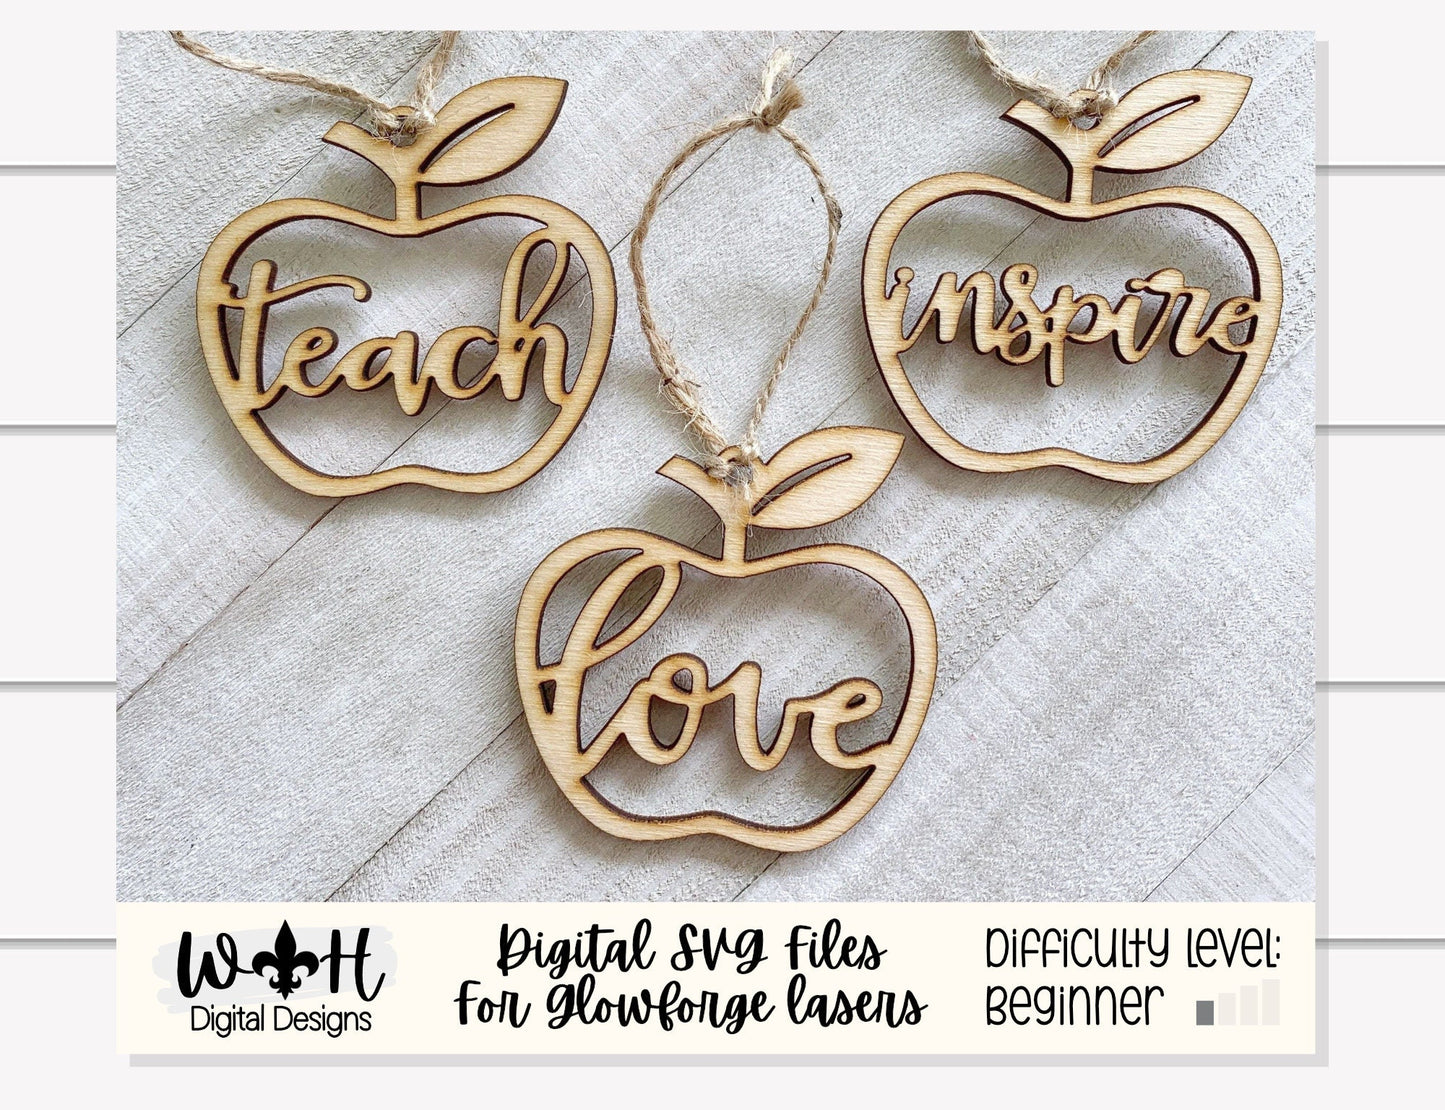 Teacher Appreciation Apple Ornaments - Teach Love Inspire - Quick Cut Gift Bag Tag Set - Cut File For Glowforge Lasers - Digital SVG File